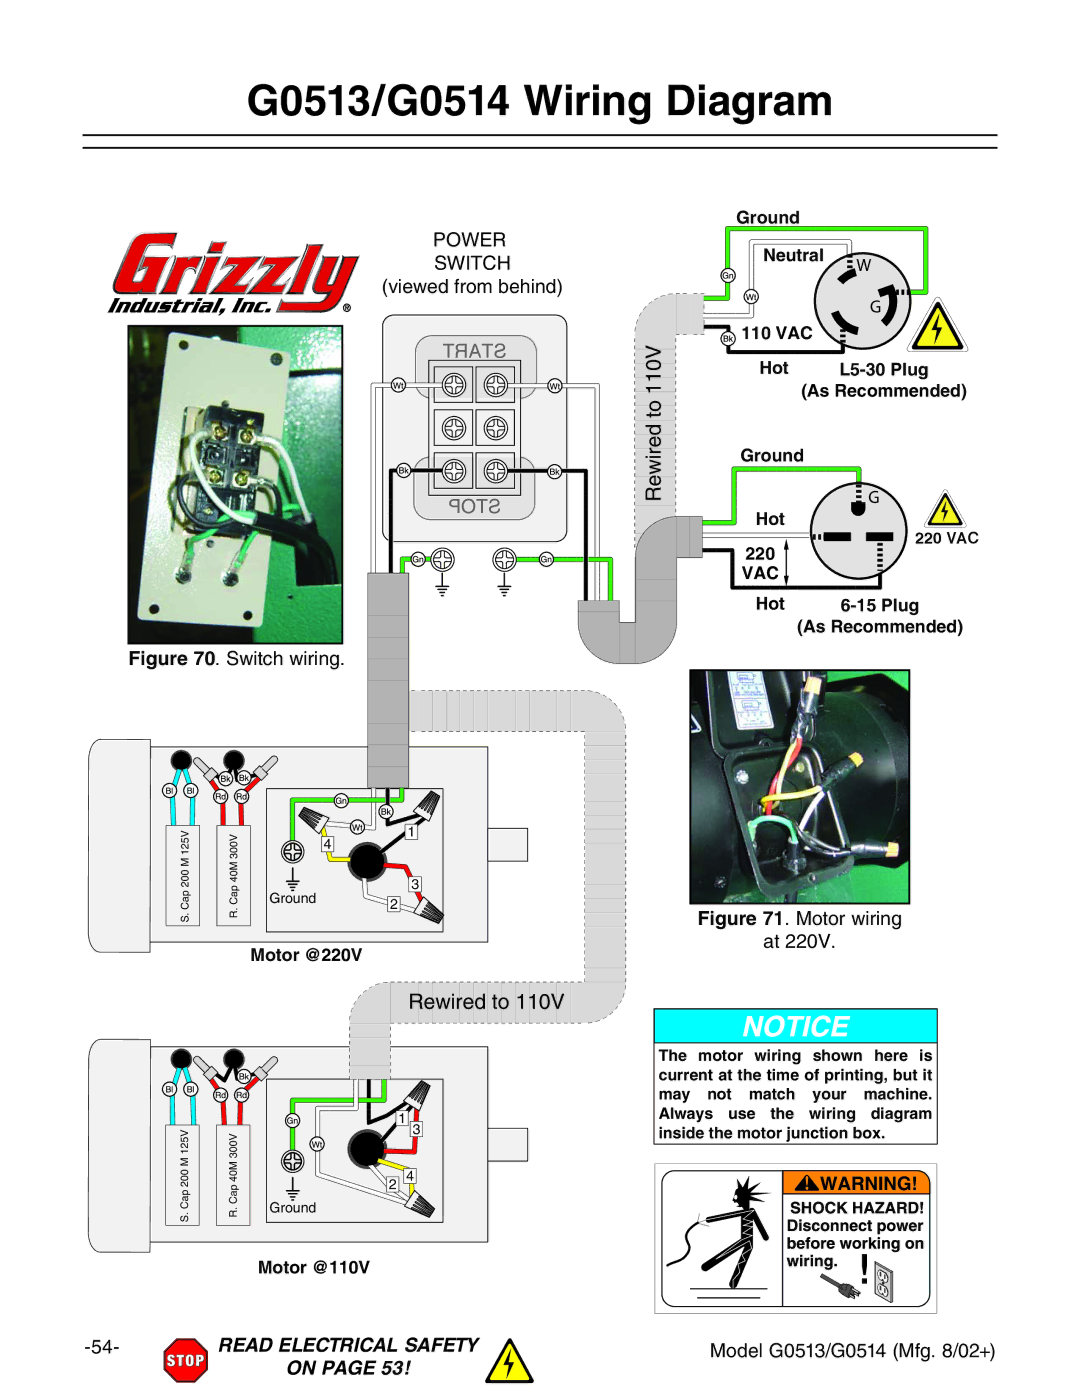 Grizzly owner manual G0513/G0514 Wiring Diagram, HLI8=, KdY&%ZlgZ&iG 